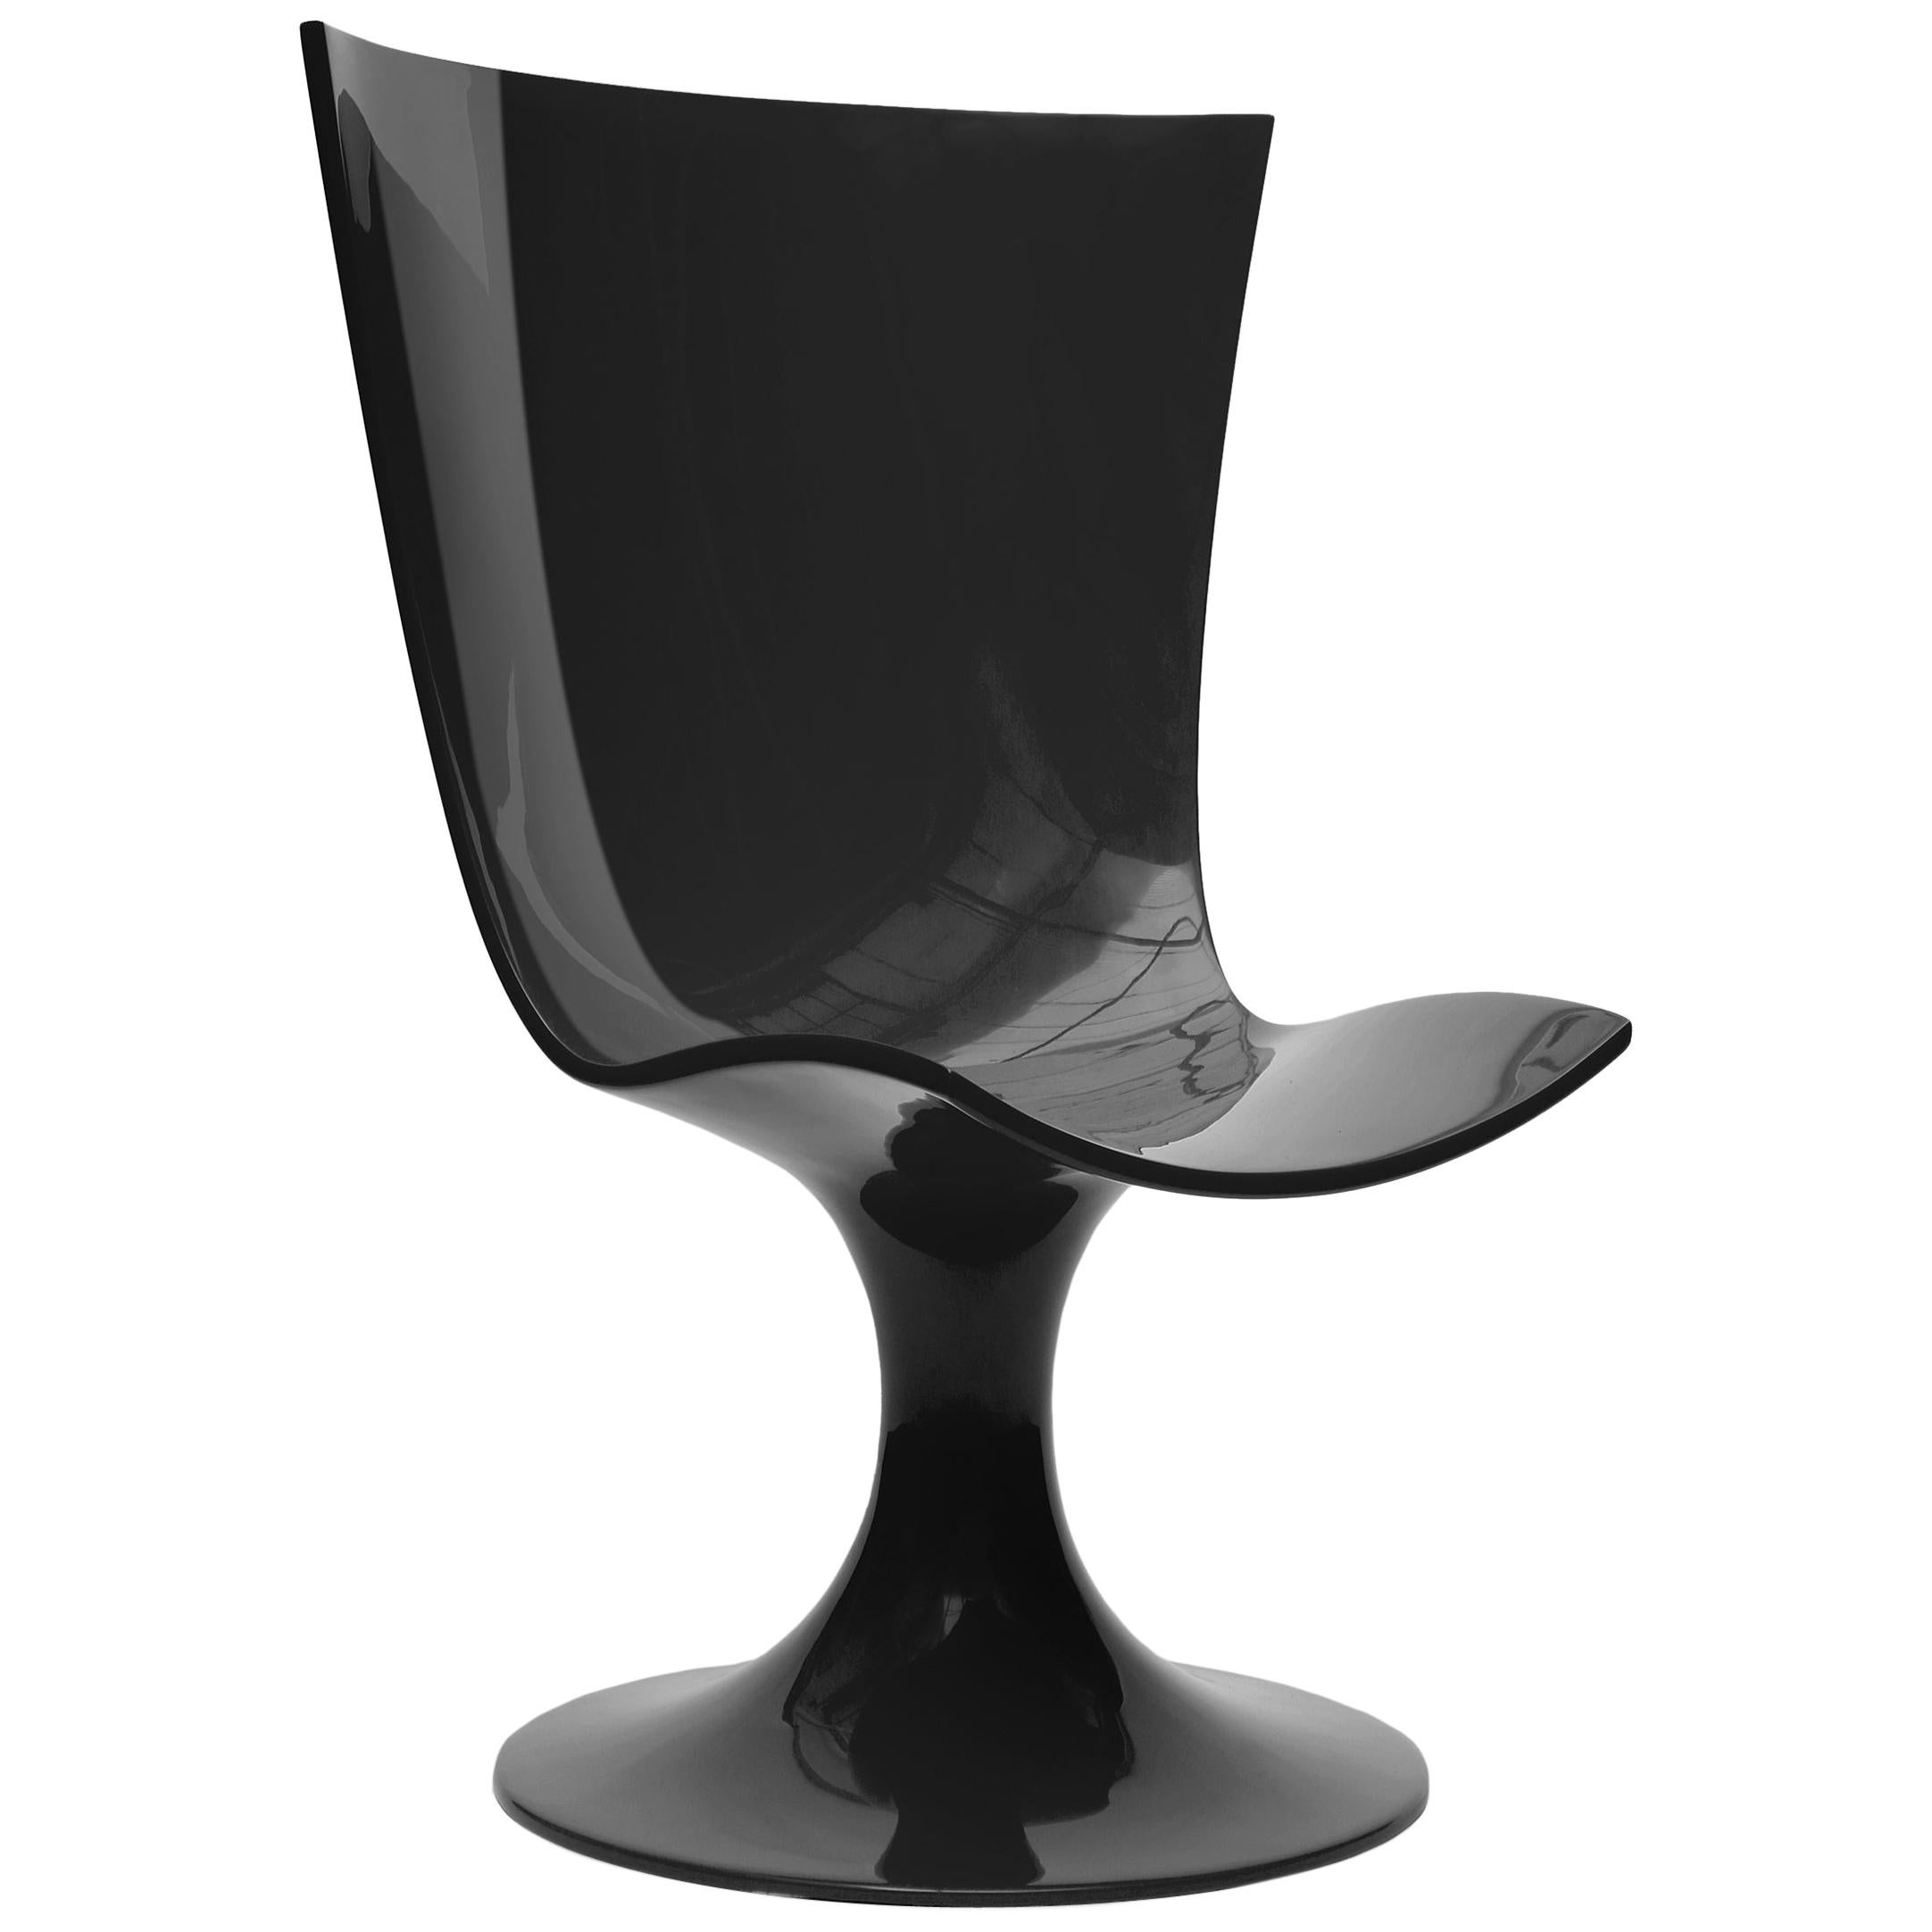 Santos, Imposing Seat, Sculptural Chair in Black by Joel Escalona